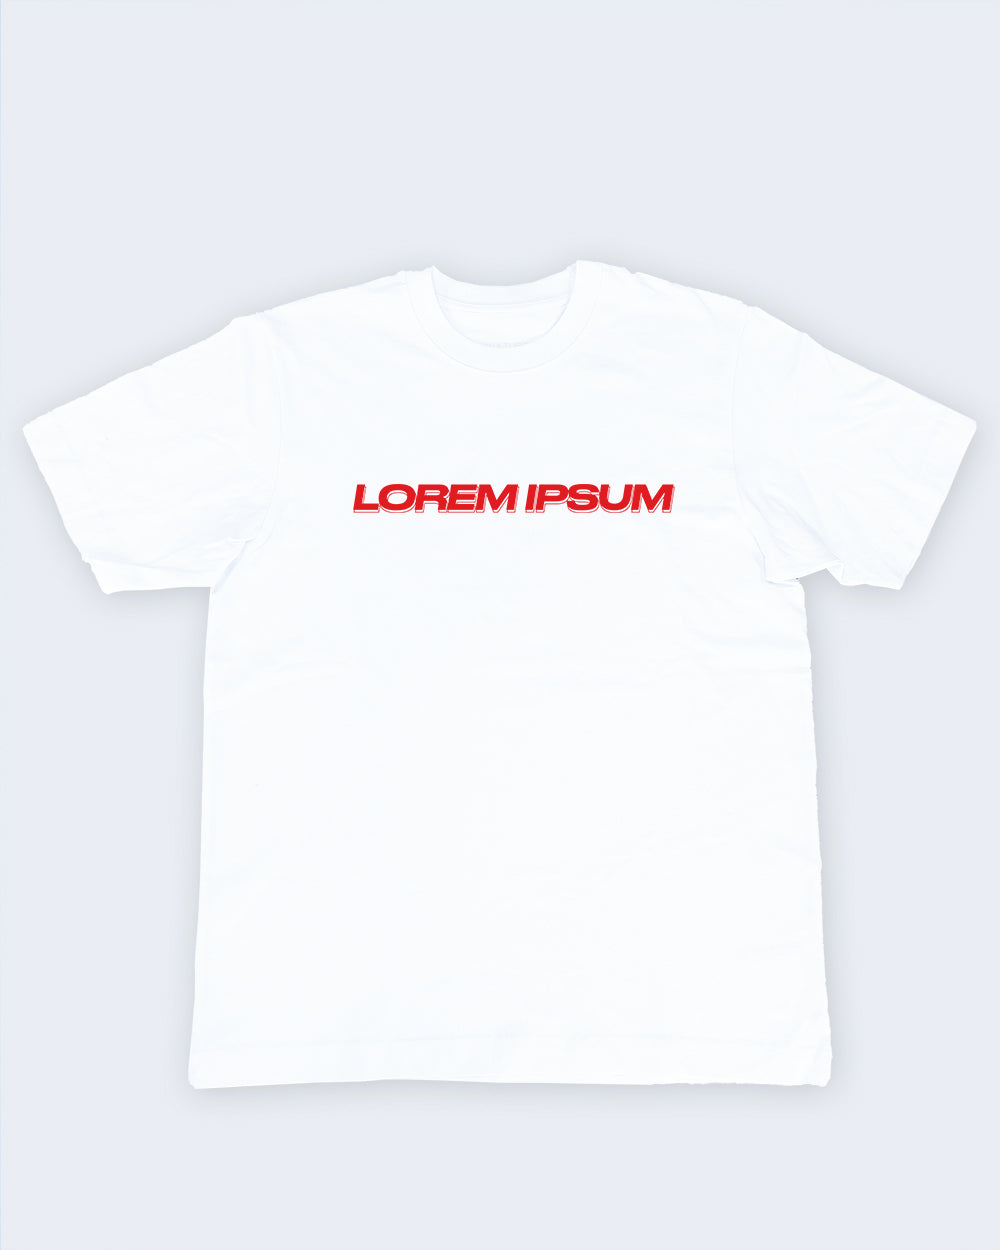 LOREM IPSUM Shirt by KUGU Studio